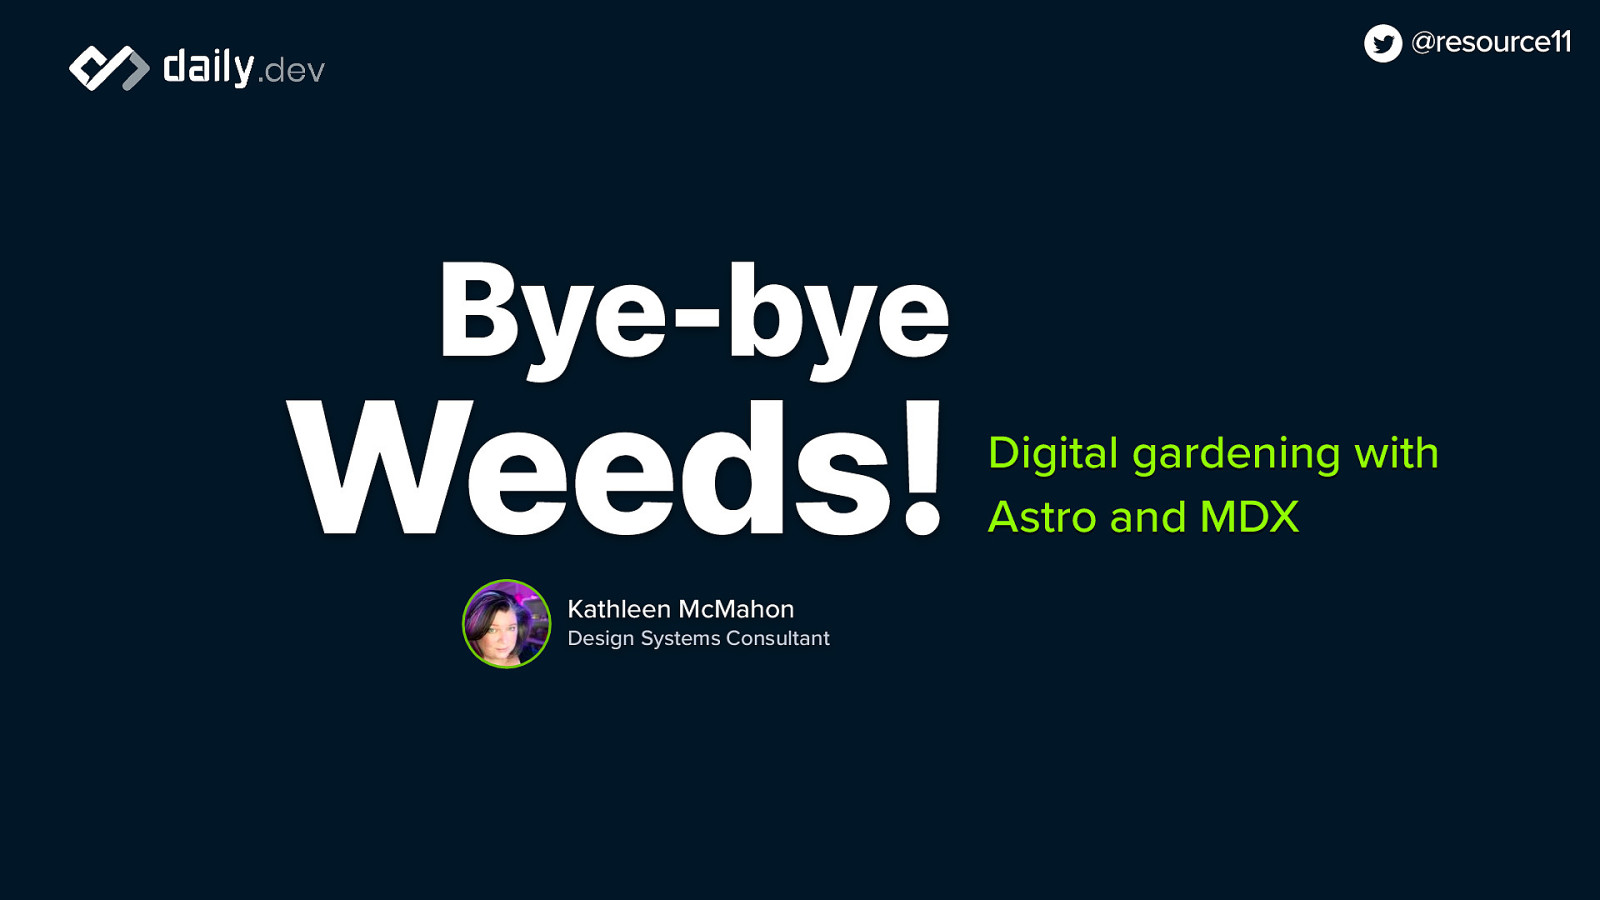 Bye-bye Weeds! Digital Gardening with Astro & MDX.